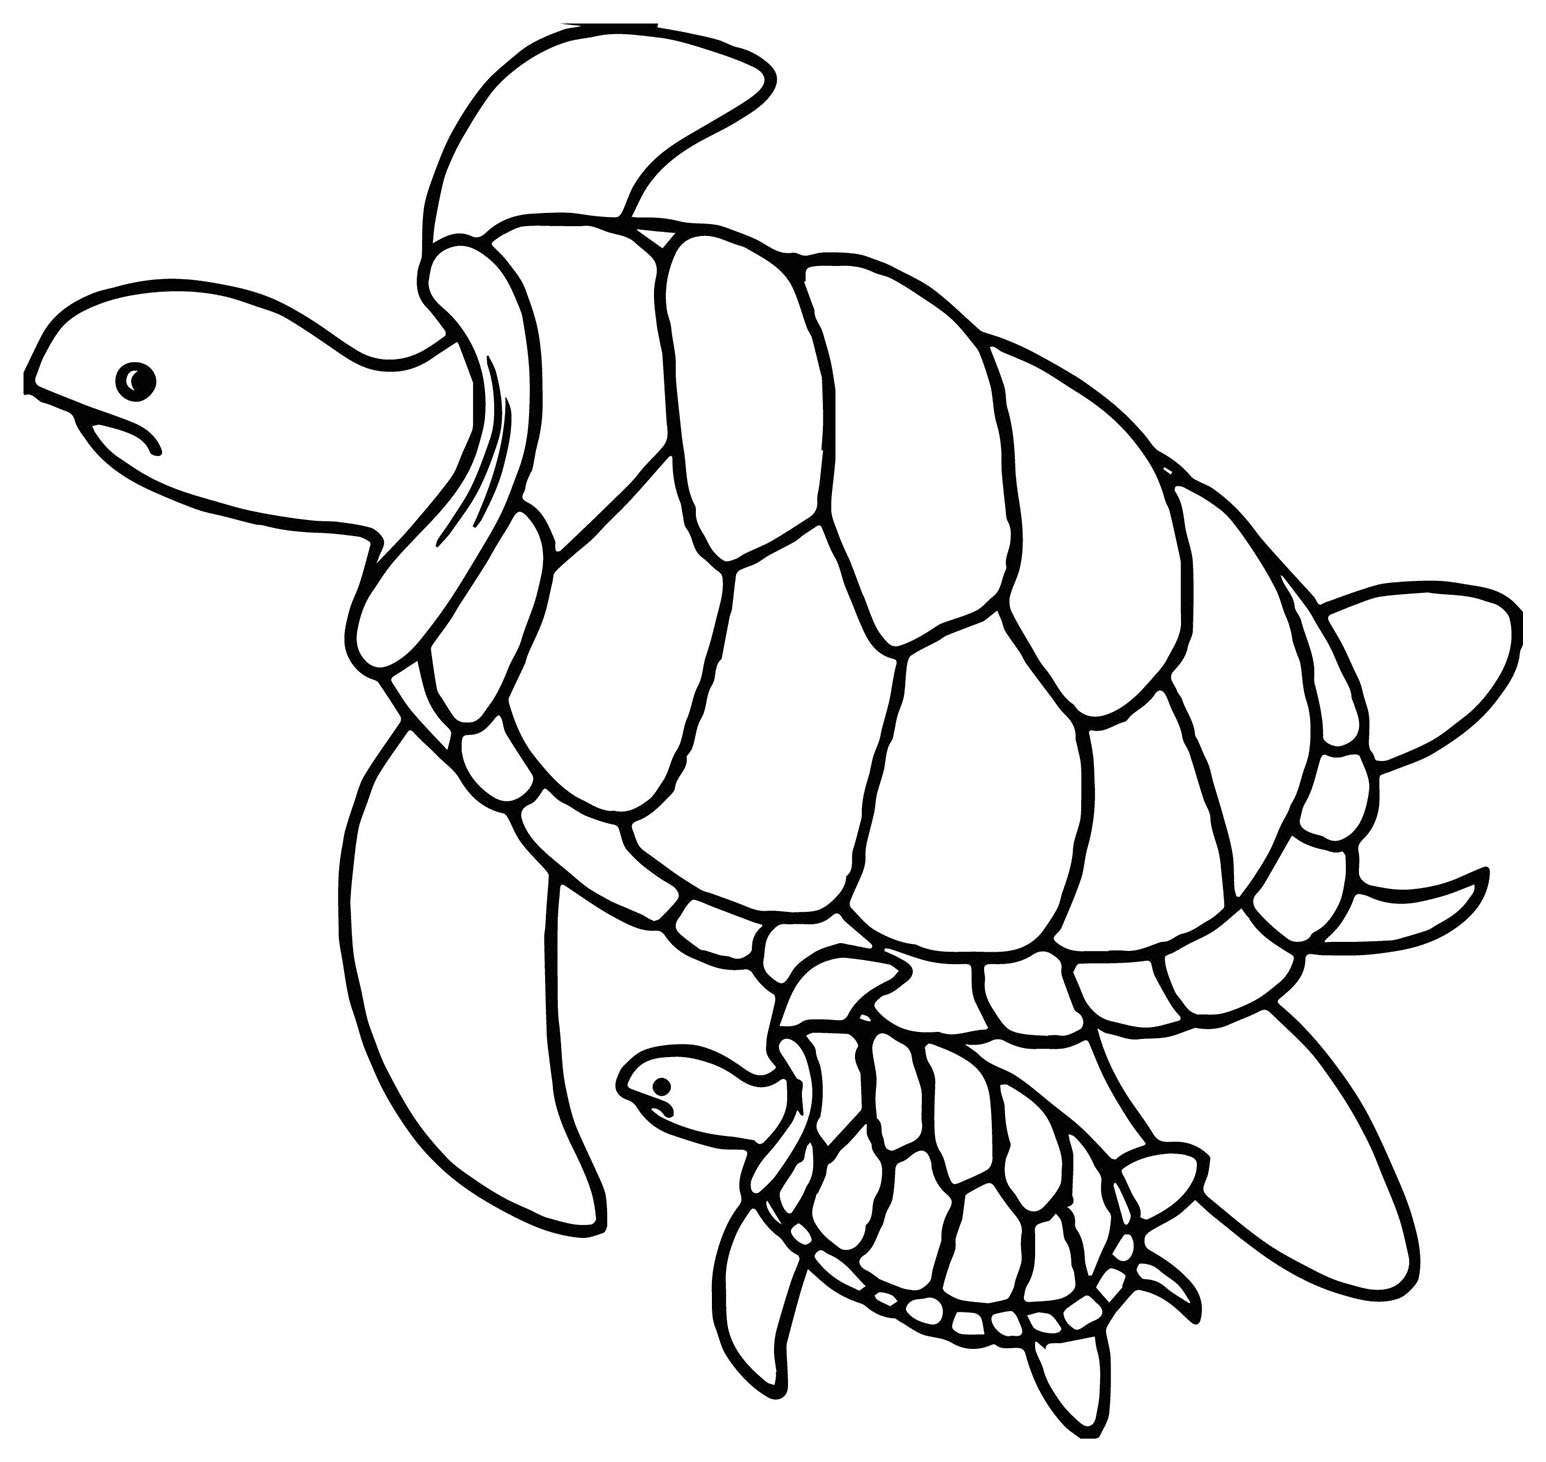 Download Turtles to print - Turtles Kids Coloring Pages